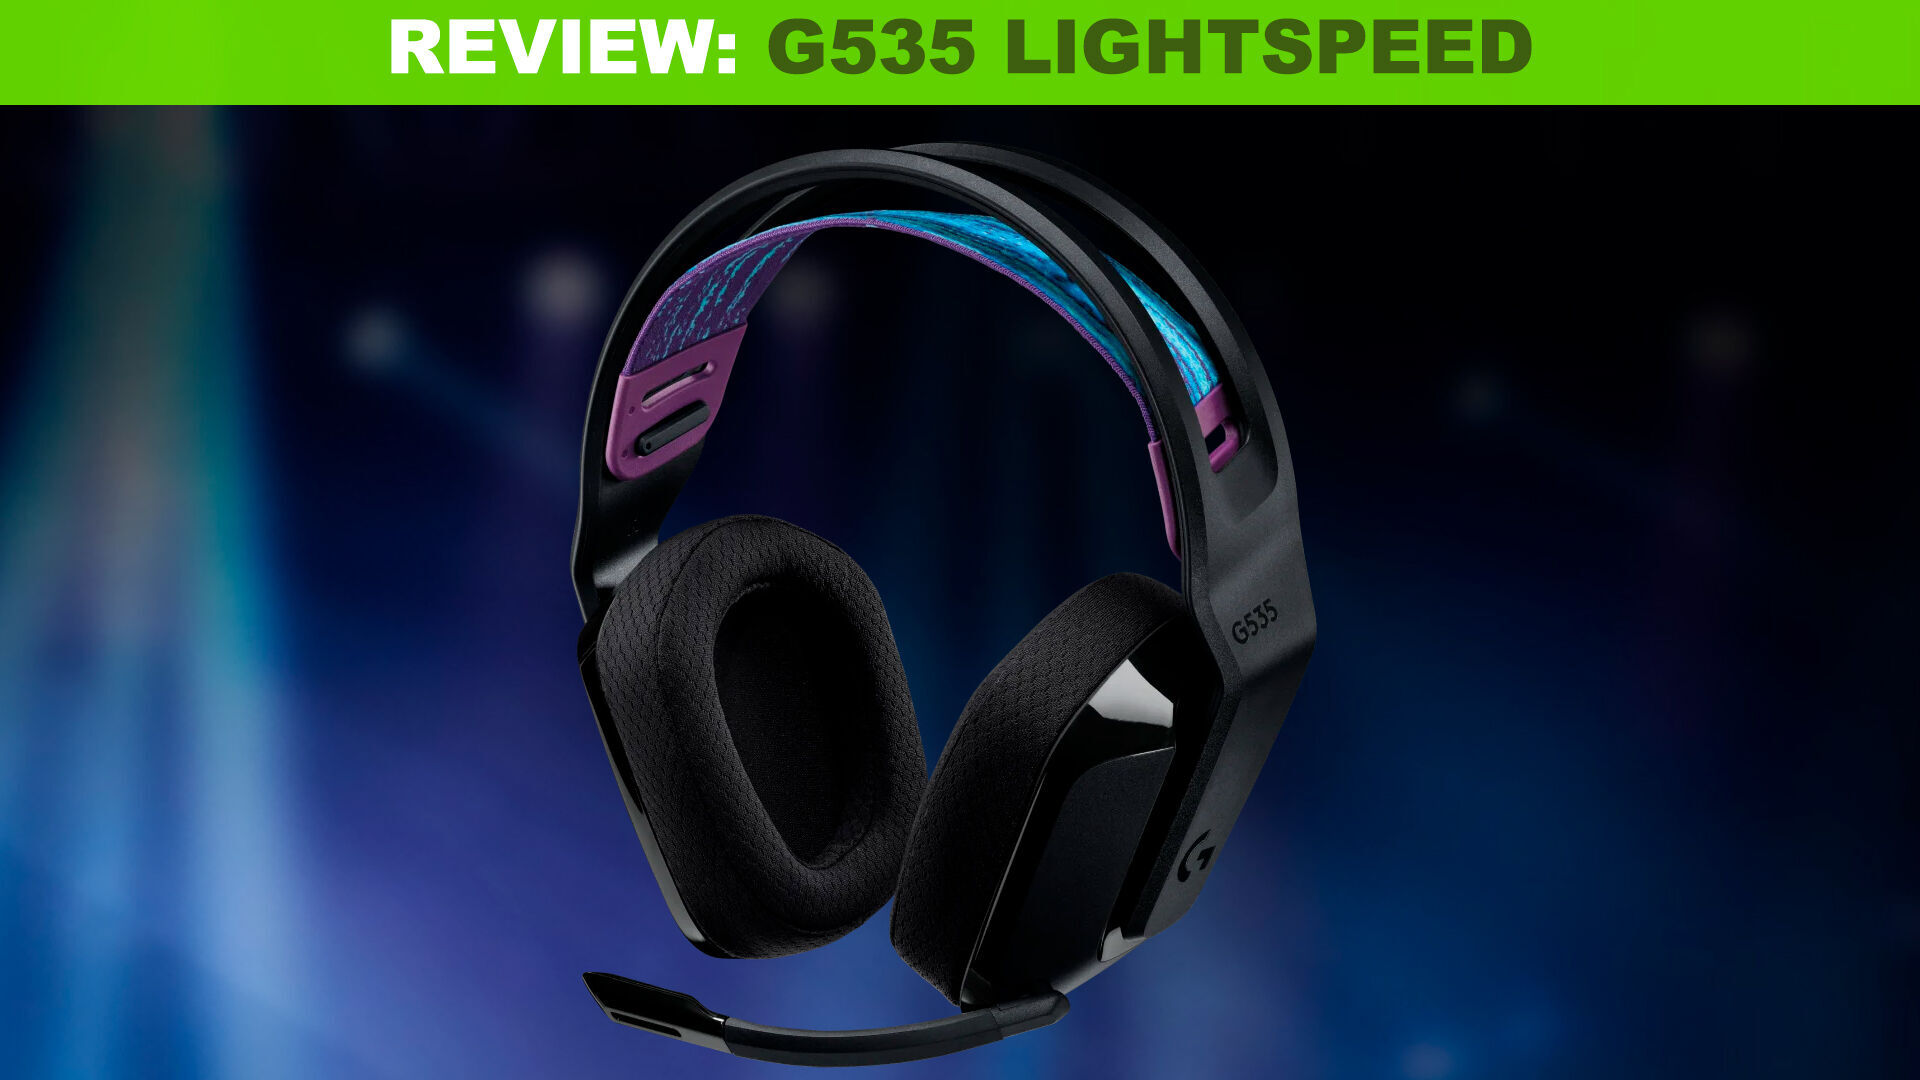 Logitech G535: Nuevos auriculares inalámbricos para gaming